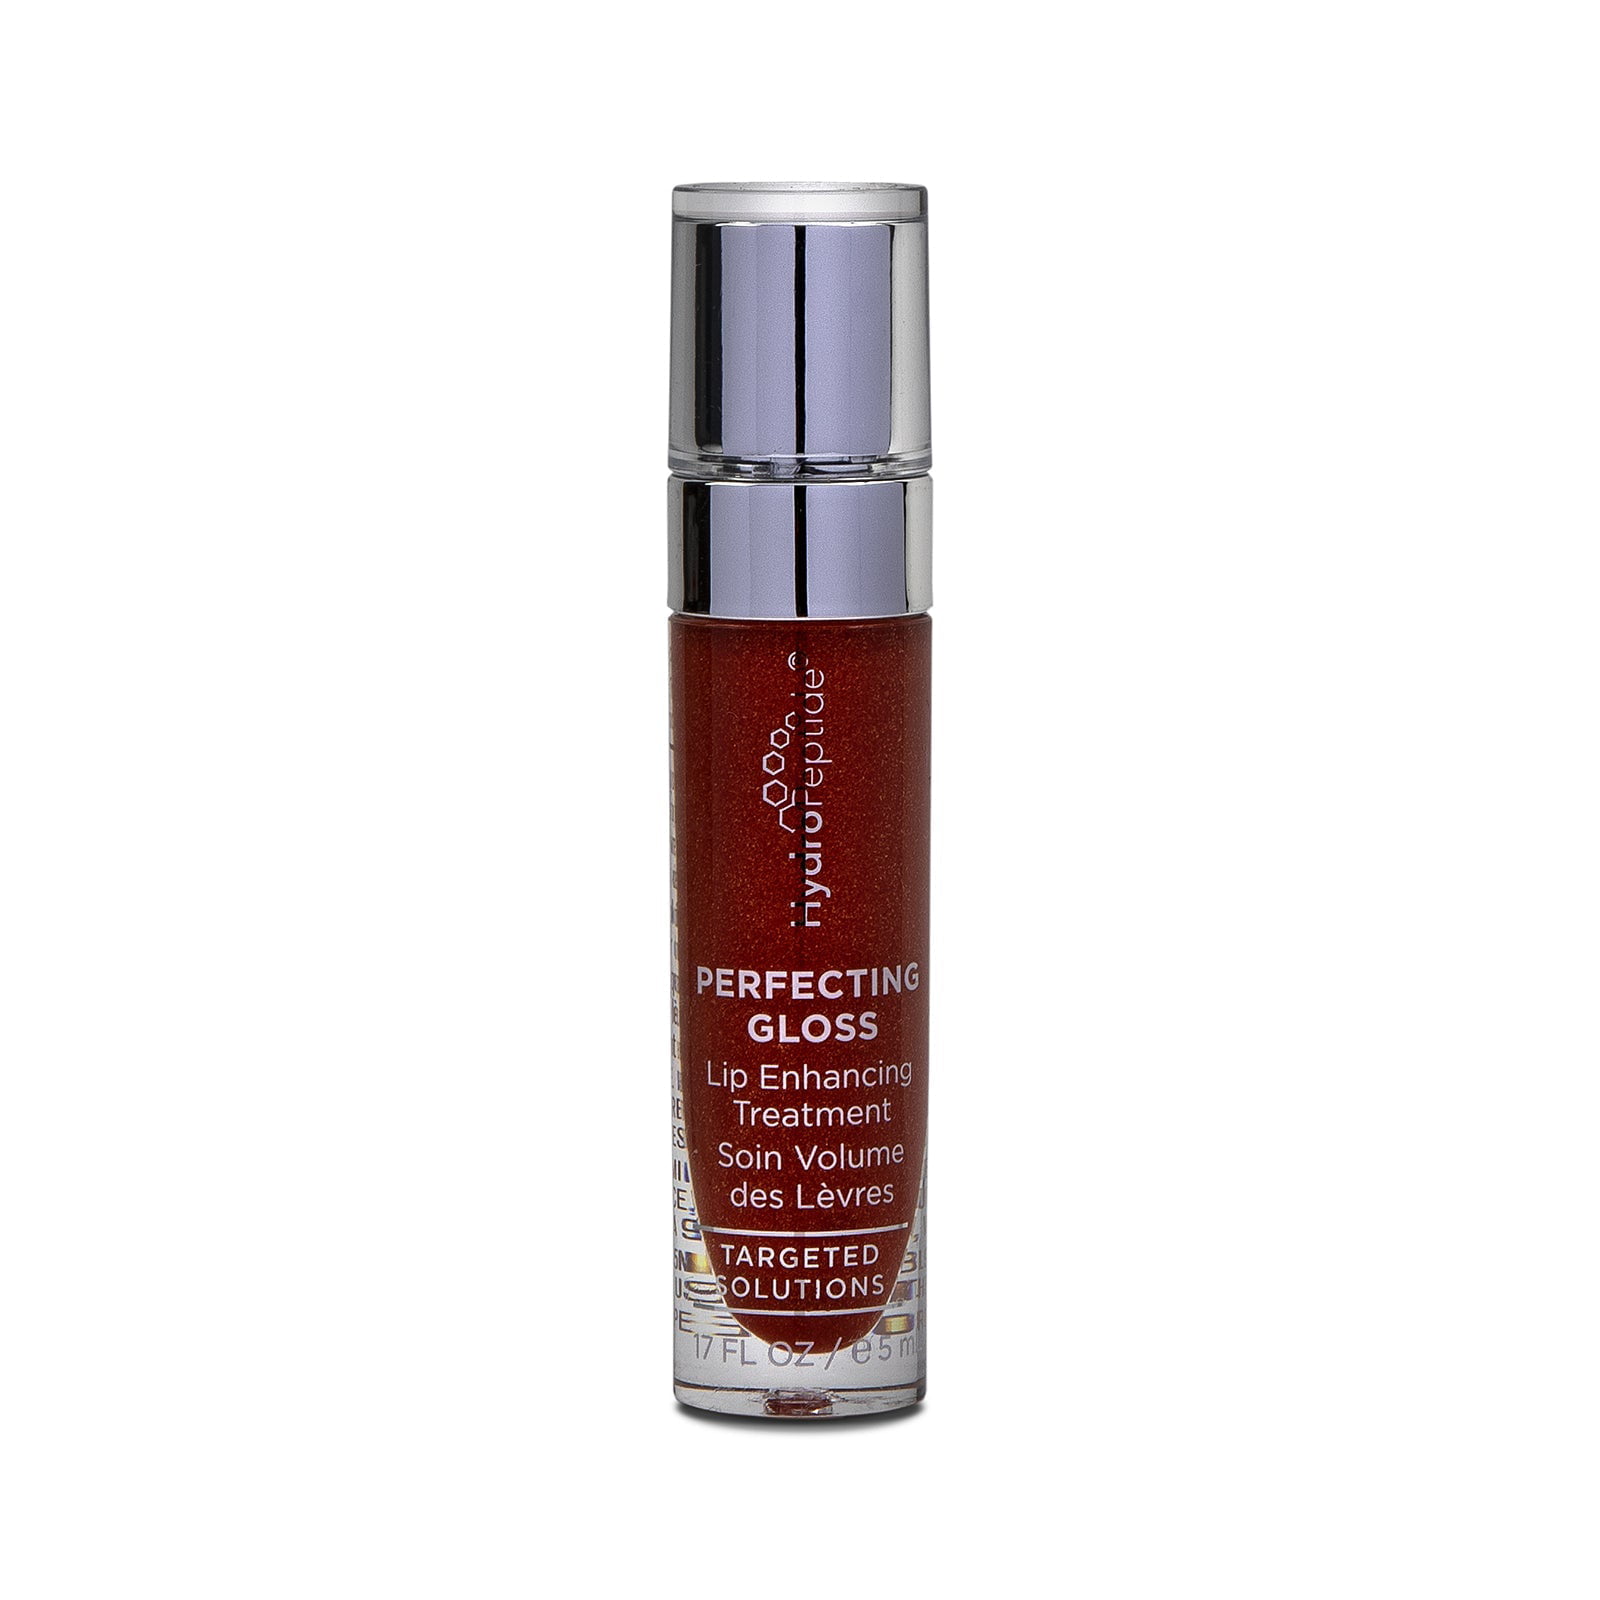 HydroPeptide Perfecting Gloss Lip Enhancing Treatment 0.17 oz